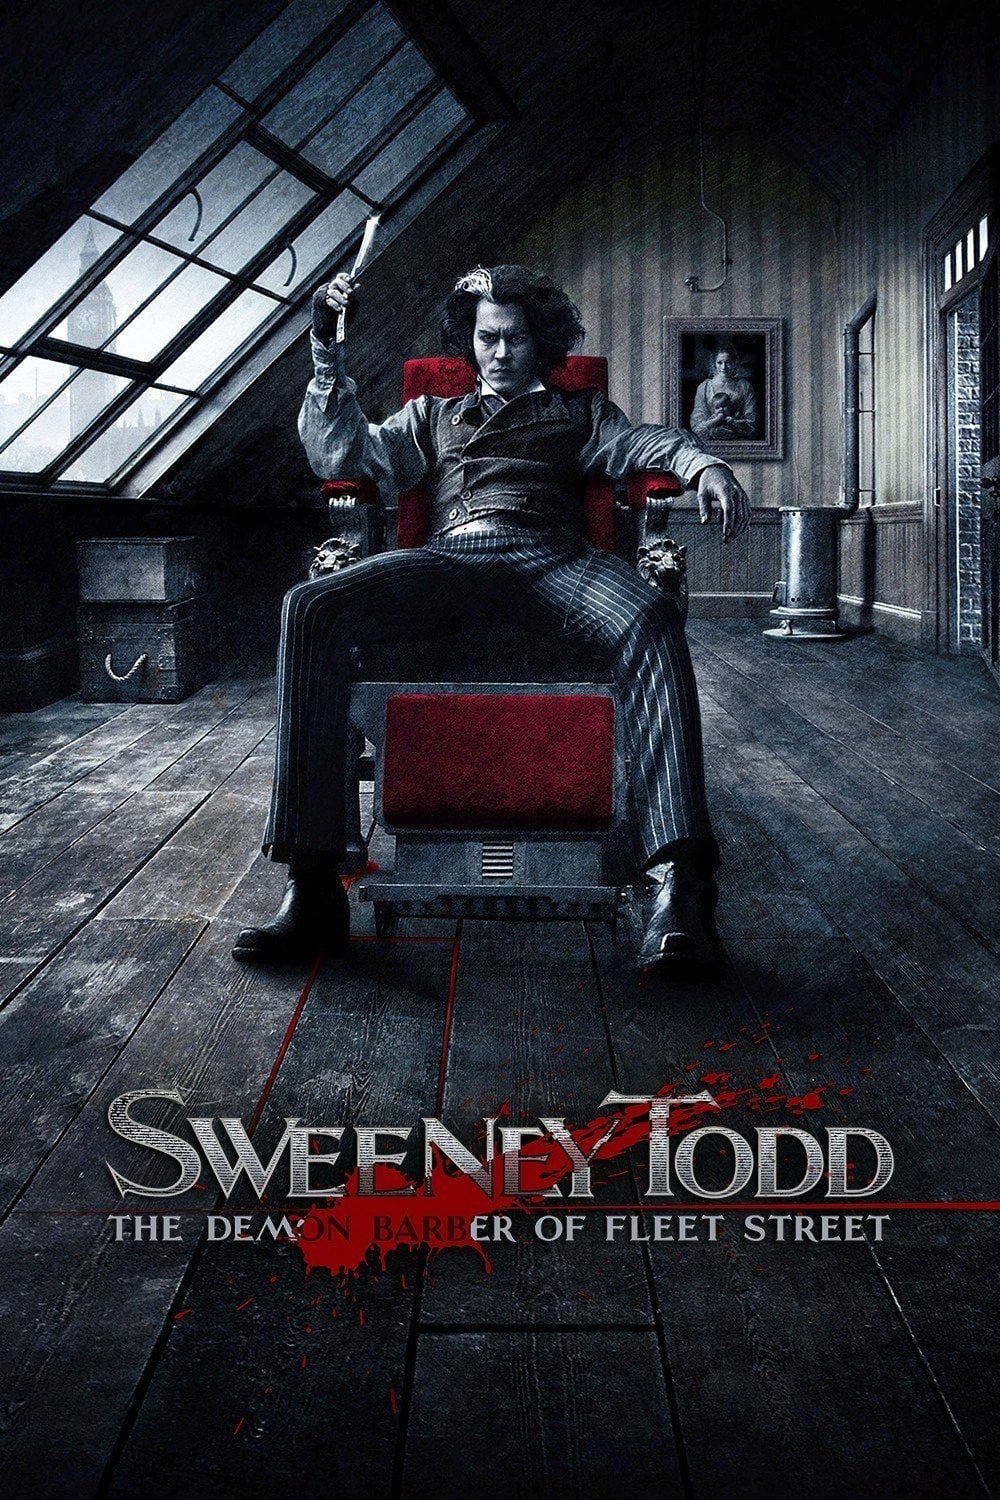 Sweeney Todd, O Barbeiro Demoníaco da Rua Fleet (2007)